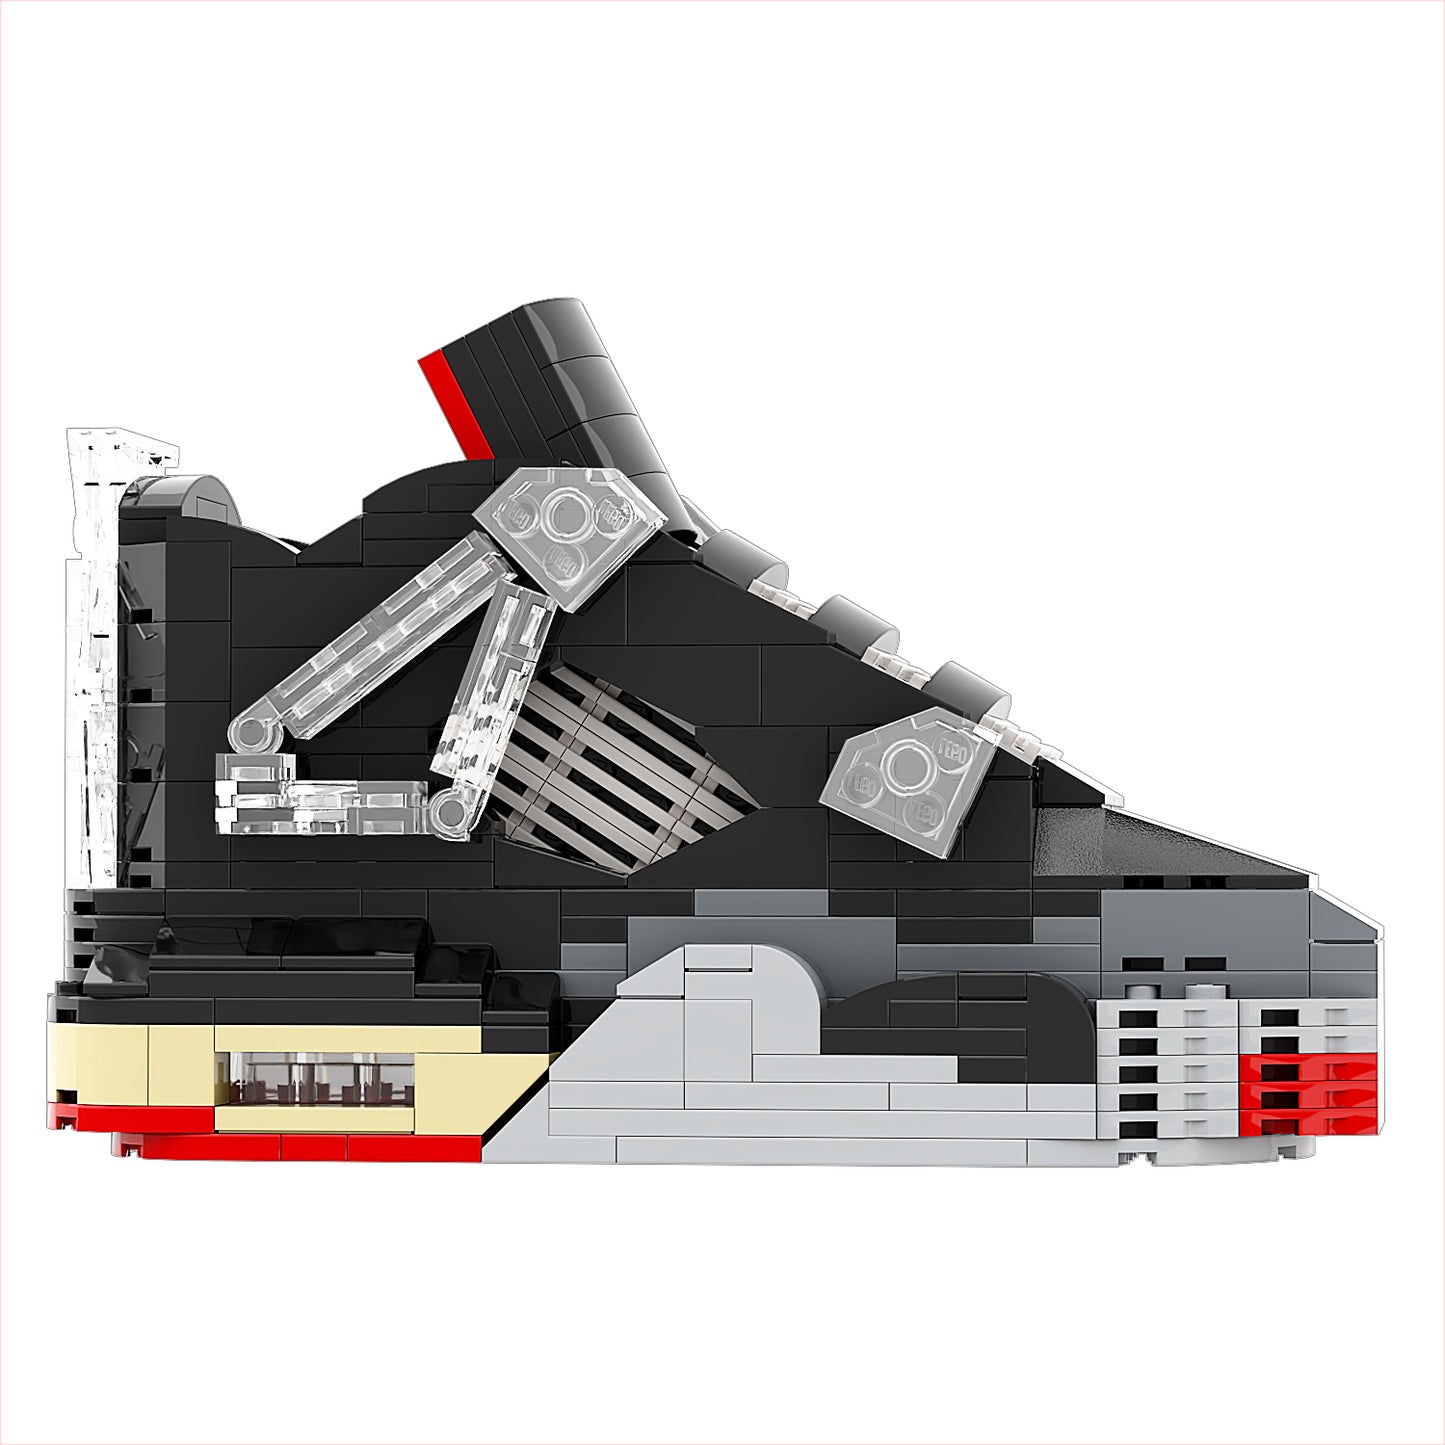 REGULAR AJ4 "OW x Bred" Sneaker Bricks Sneaker with Mini Figure